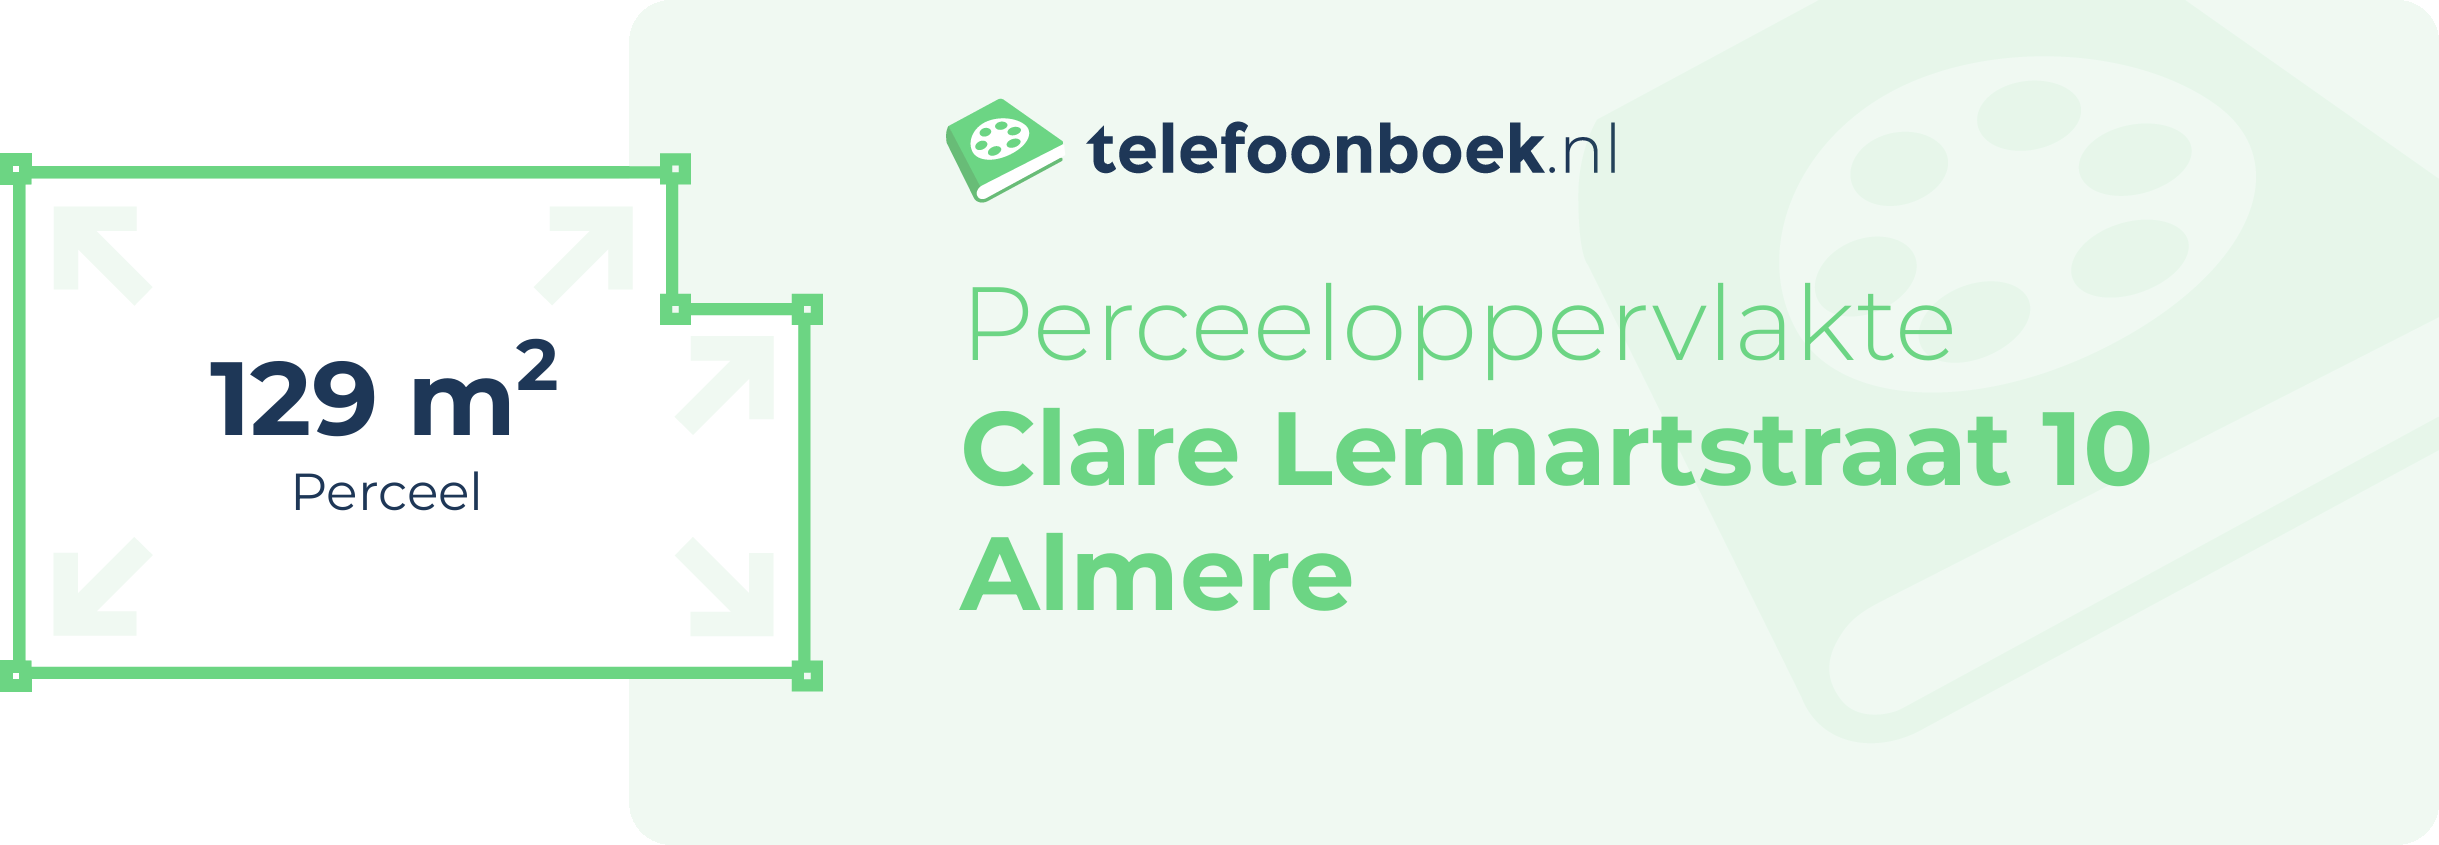 Perceeloppervlakte Clare Lennartstraat 10 Almere